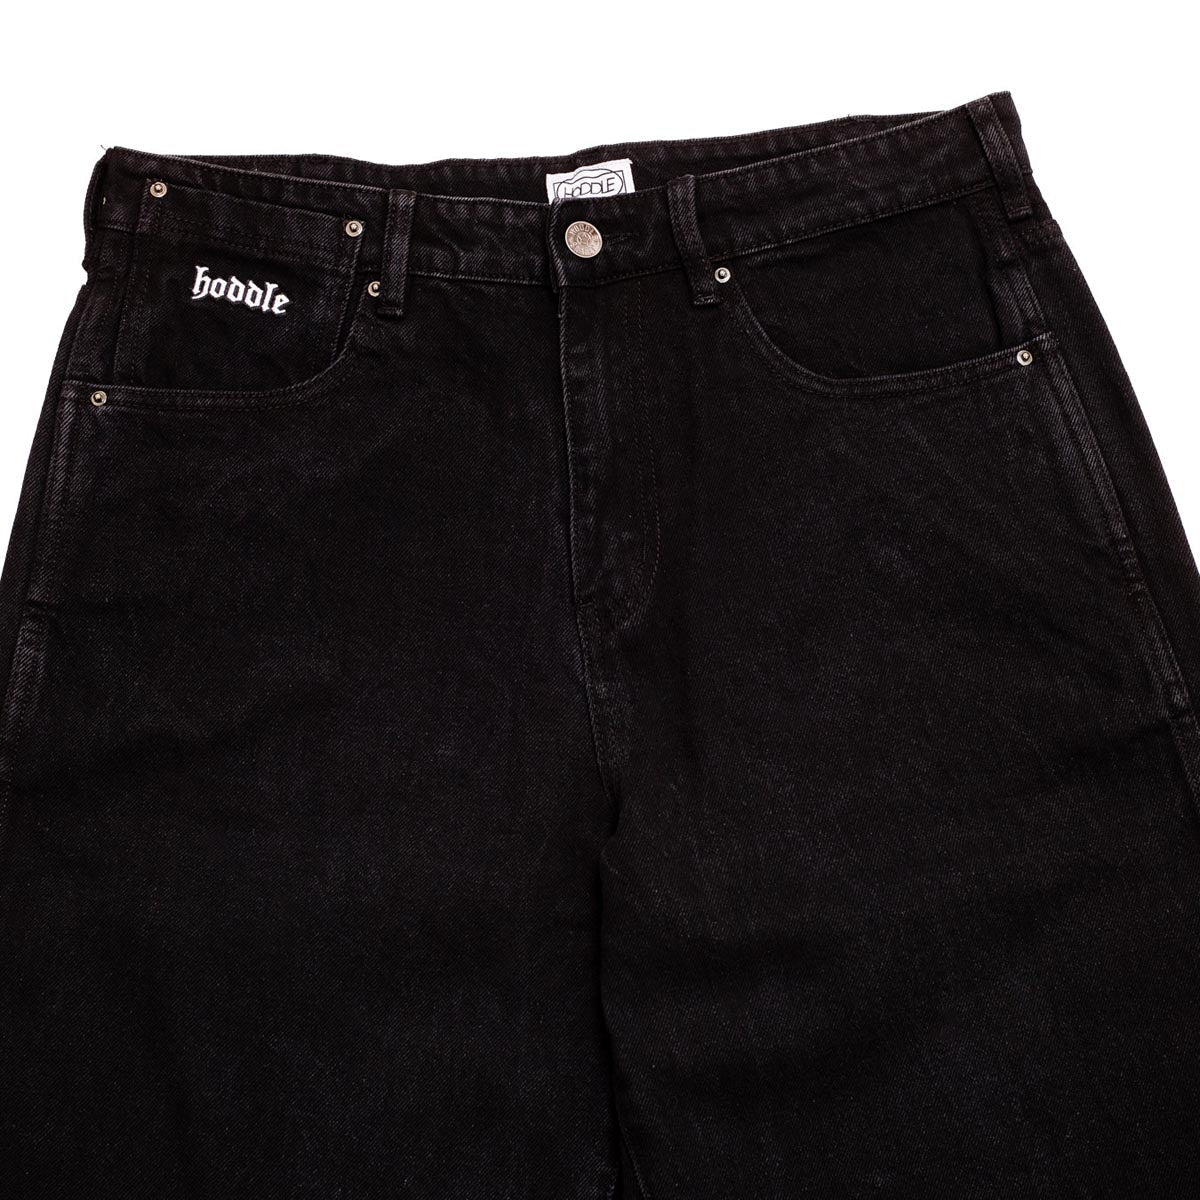 Hoddle 16o Denim Ranger Jeans - Black/Black image 5